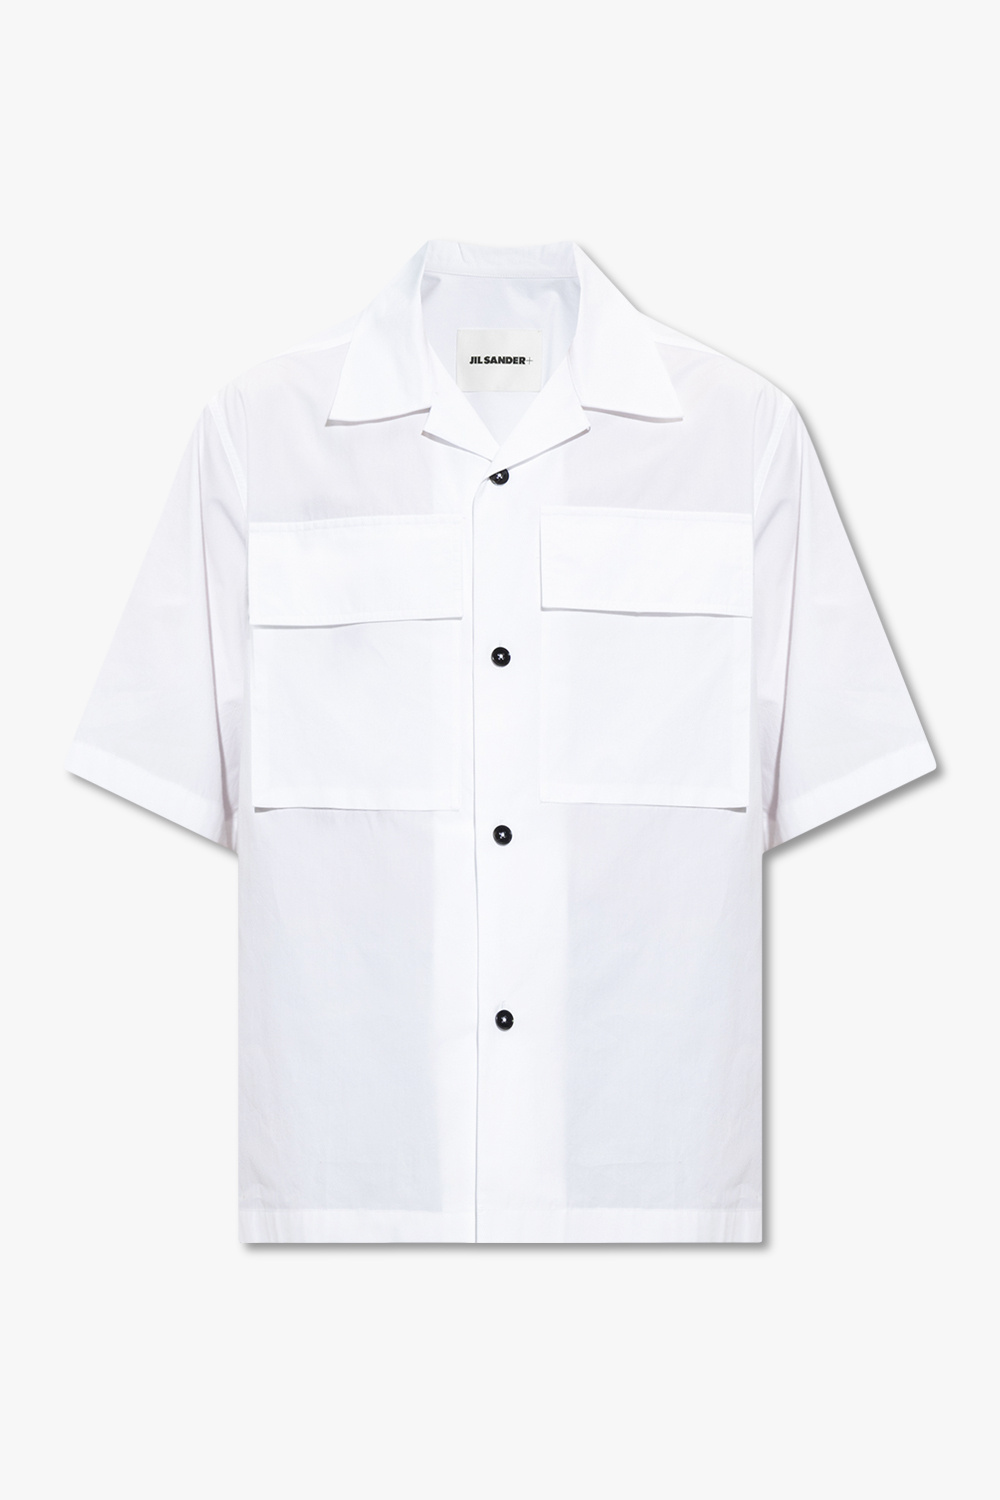 JIL SANDER+ Cotton shirt